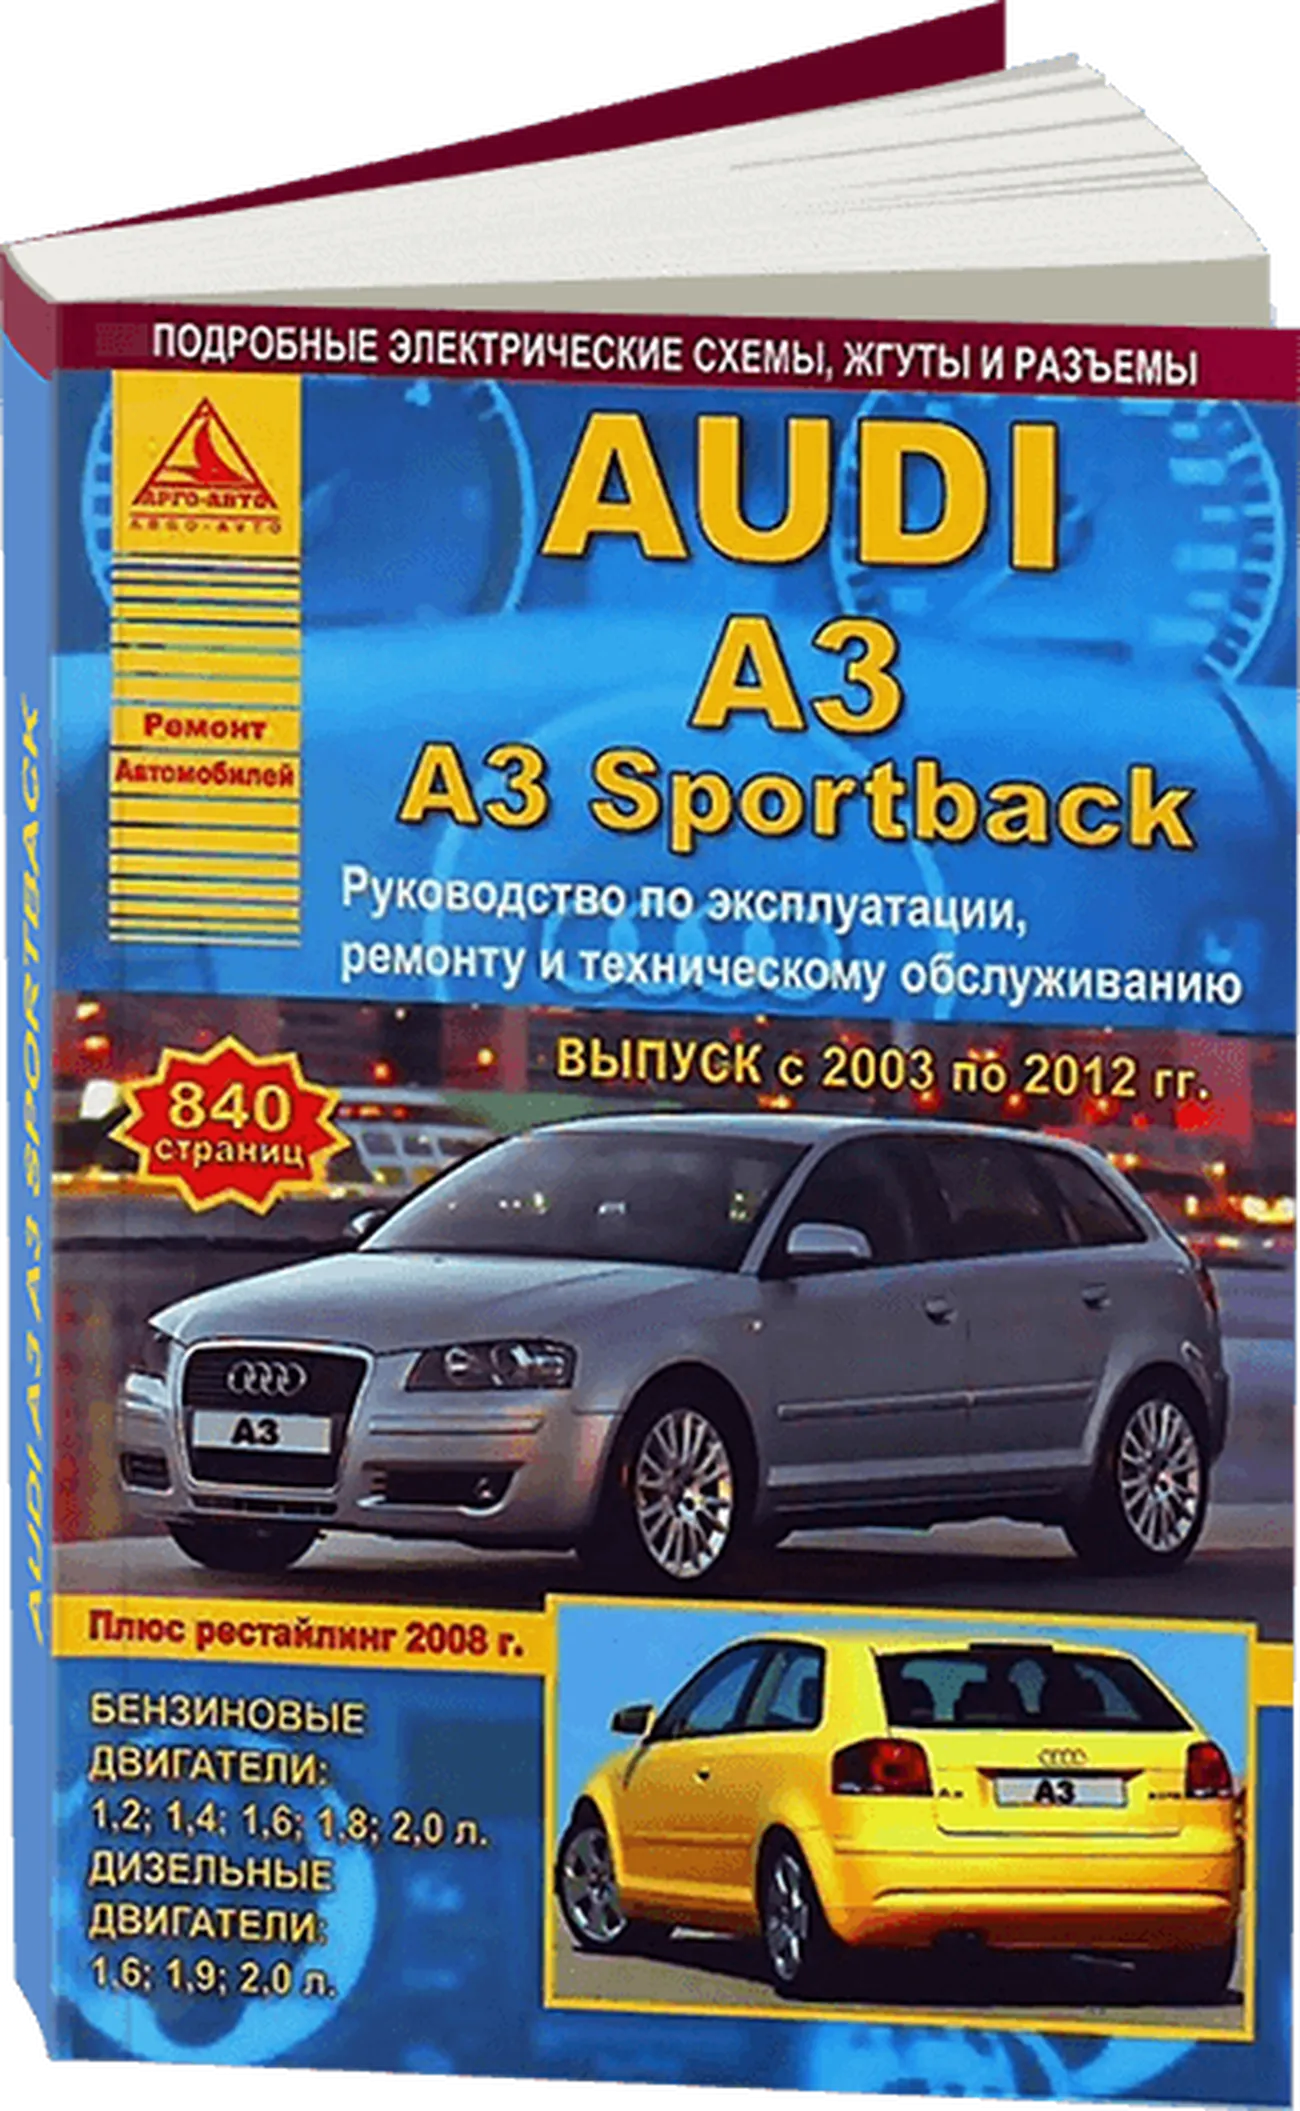 Книга: AUDI A3 (б , д) 2003-2012 г.в., рем., экспл., то | Арго-Авто